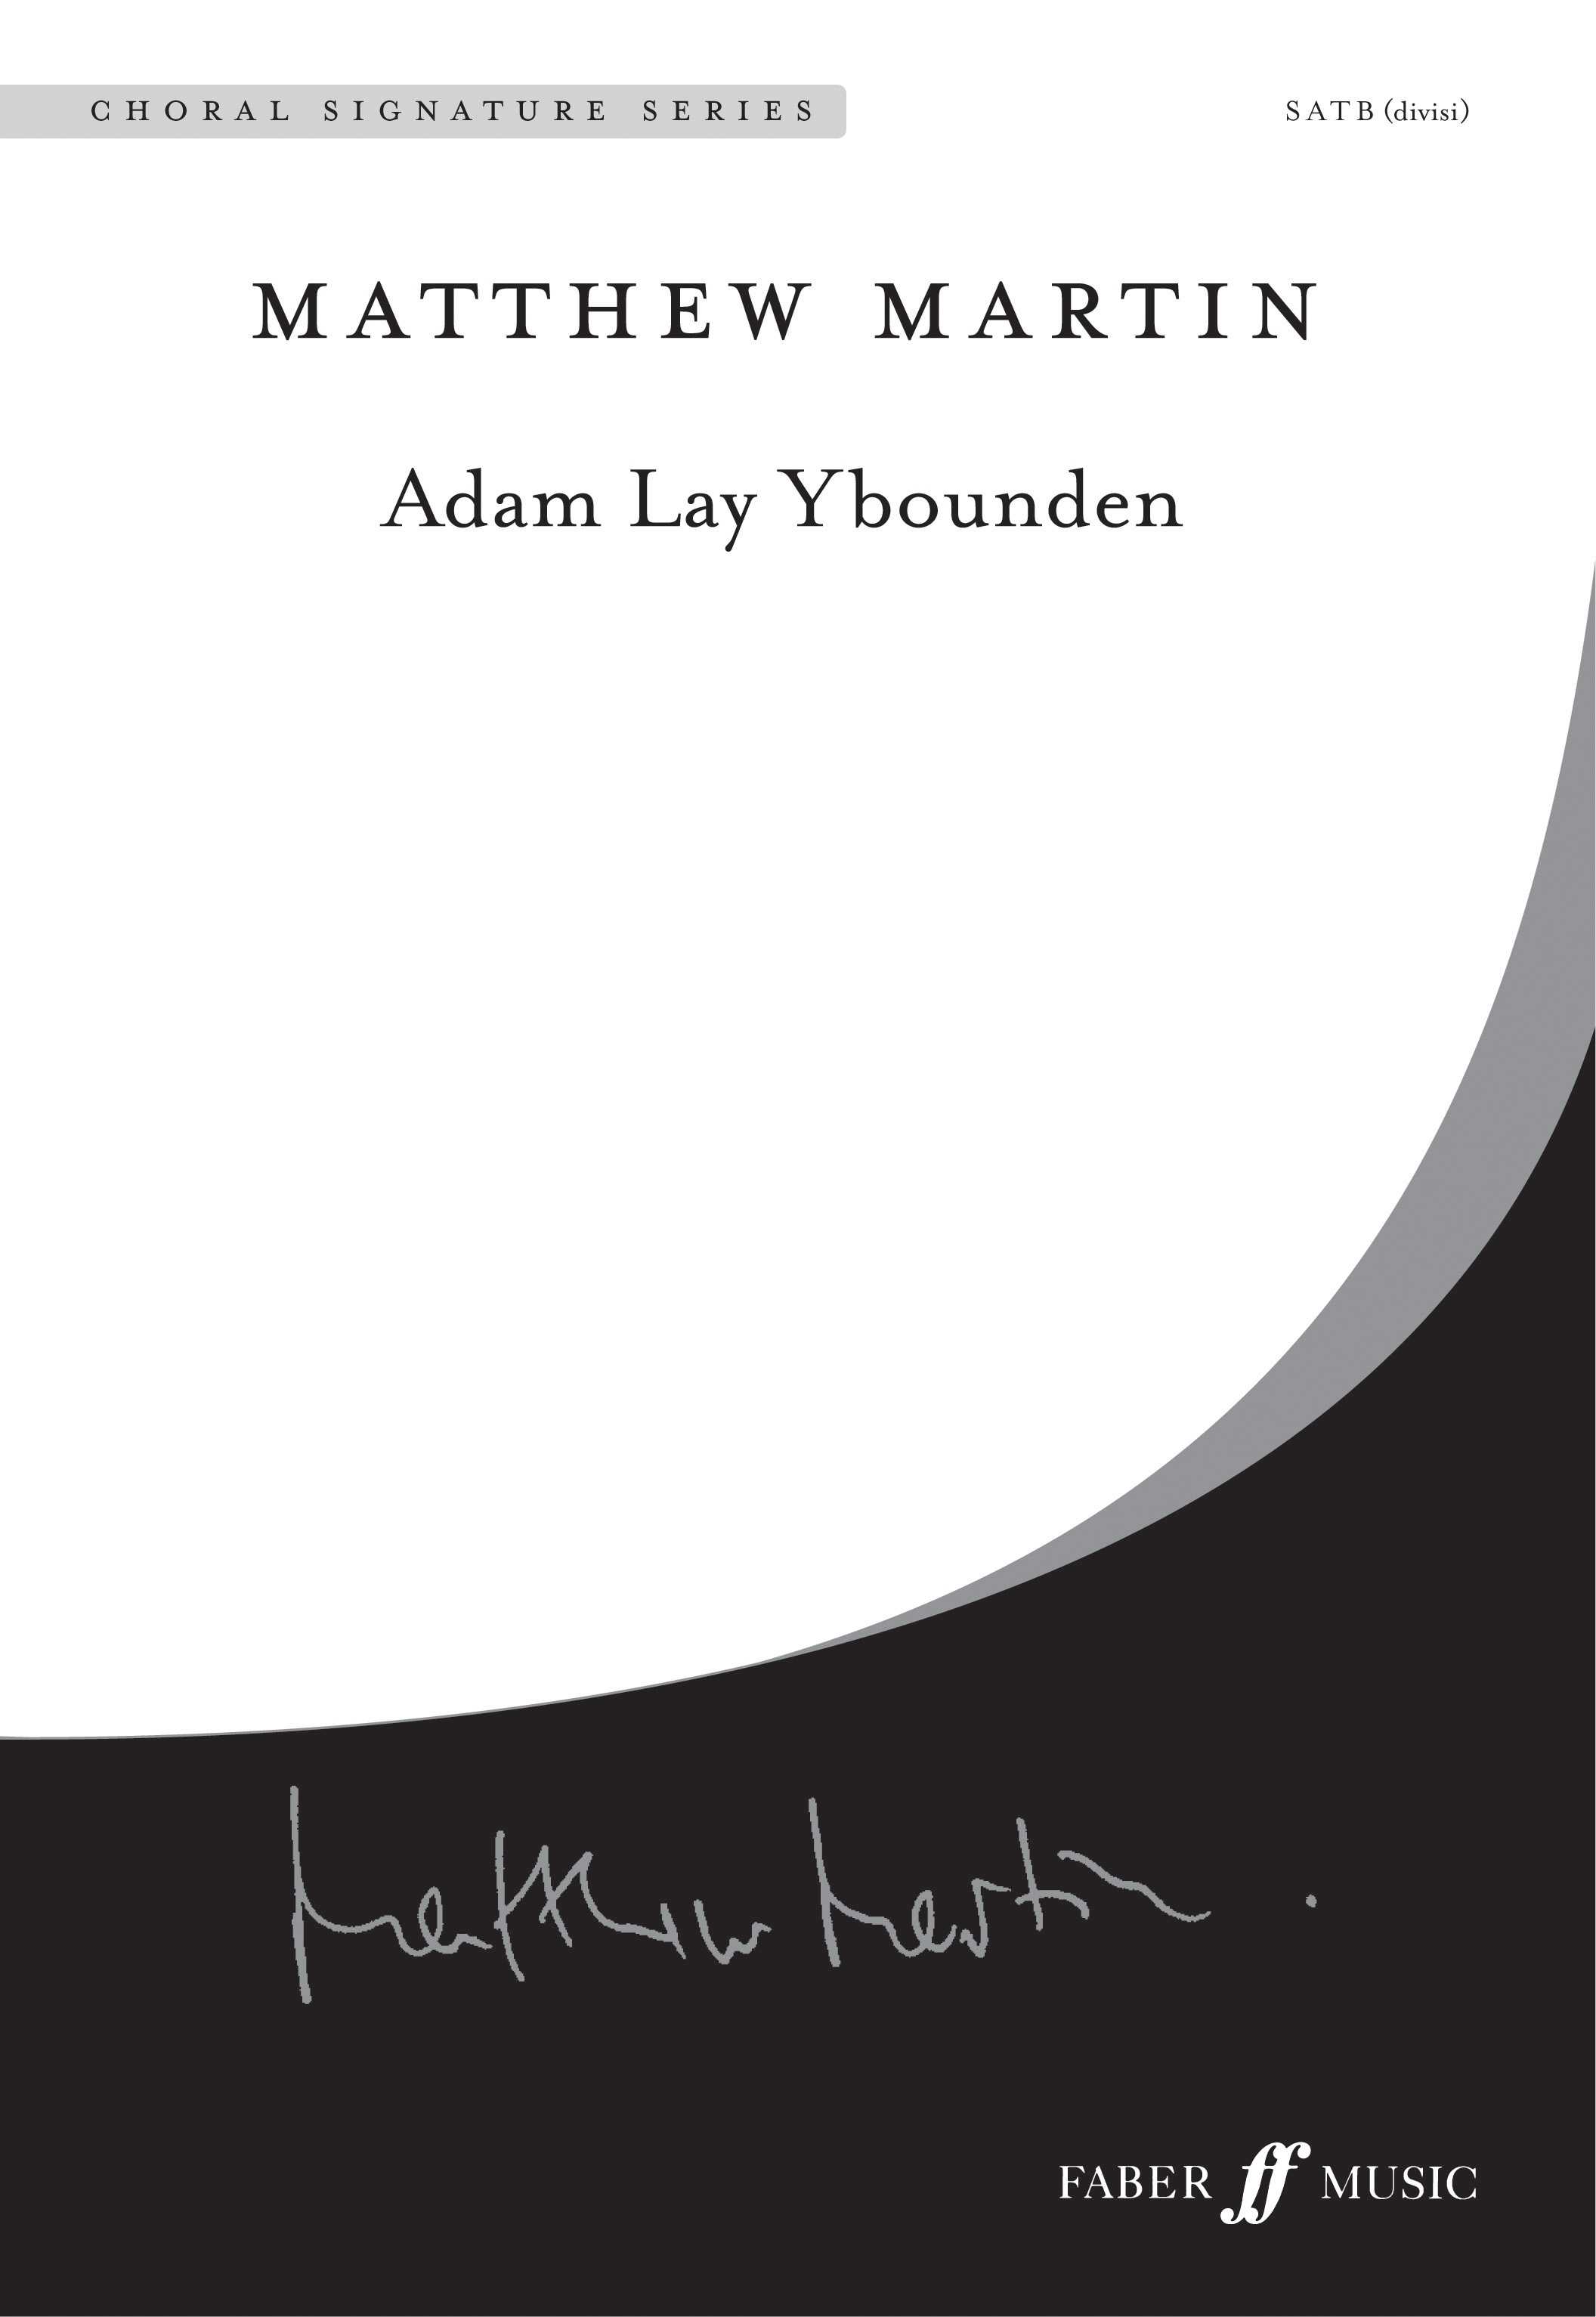 ADAM LAY YBOUNDEN.